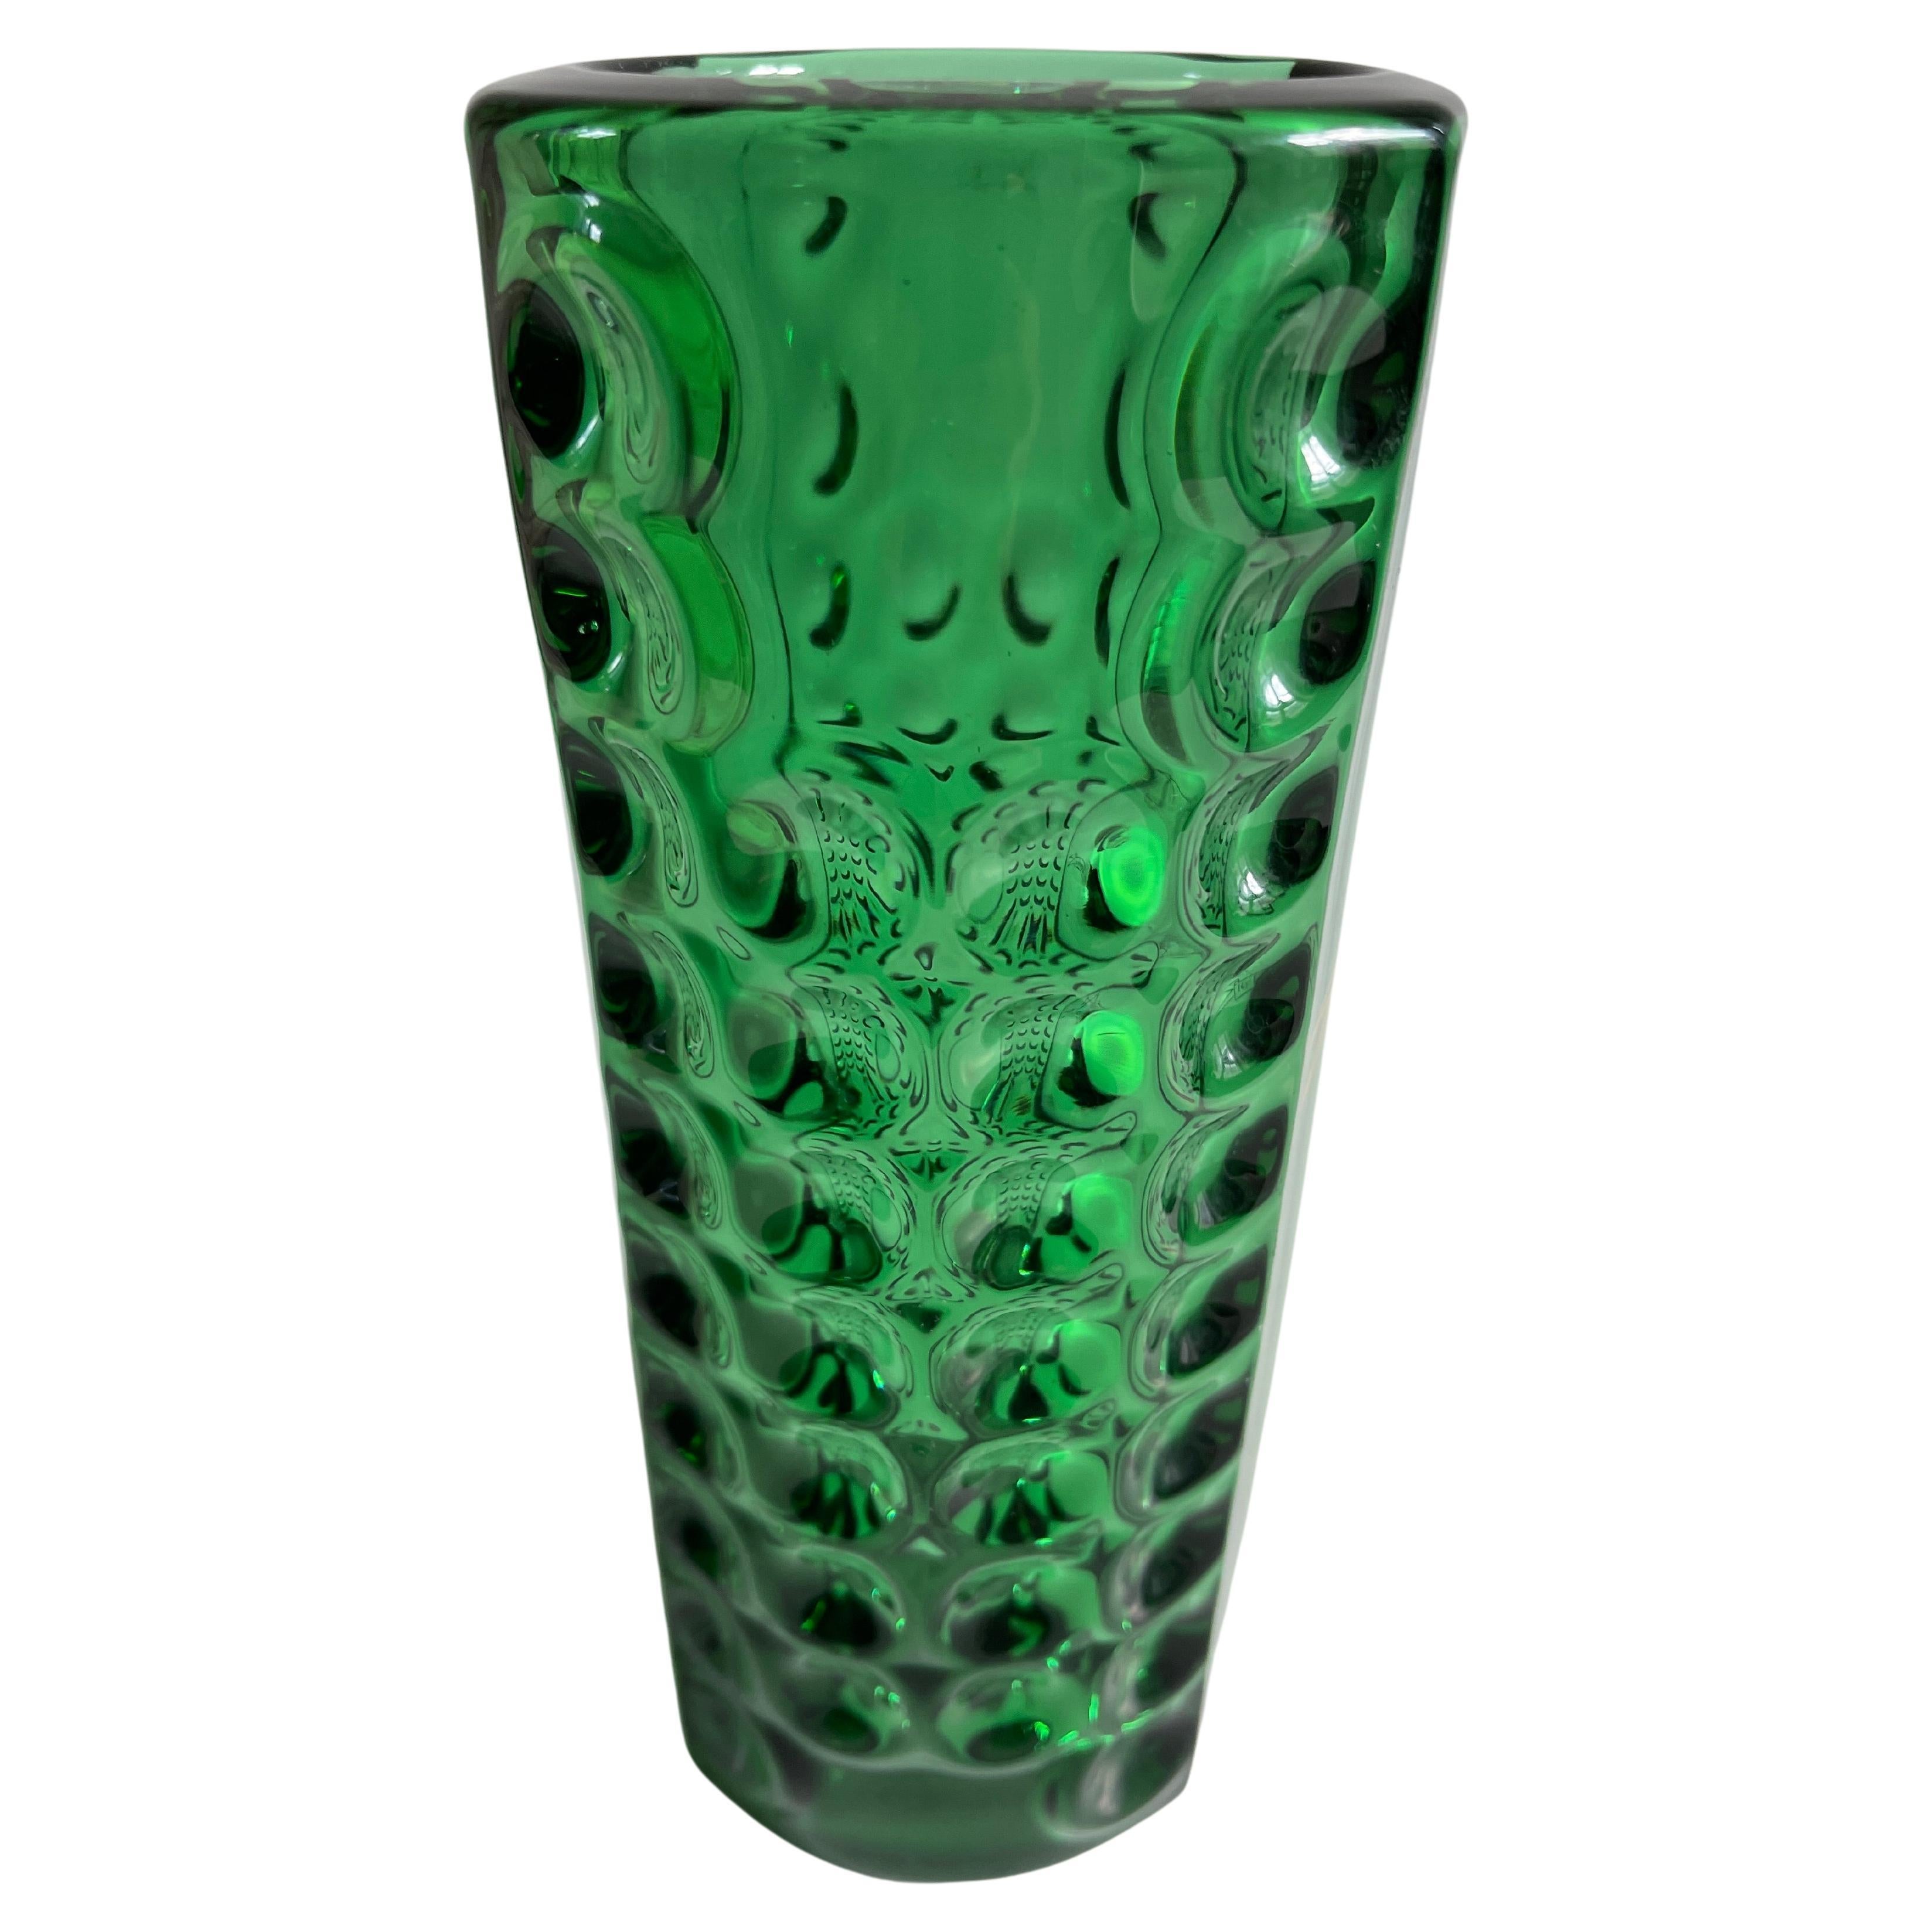 Emerald Green Optical Glass Vase by Rudolf Jurnikl, 1960s